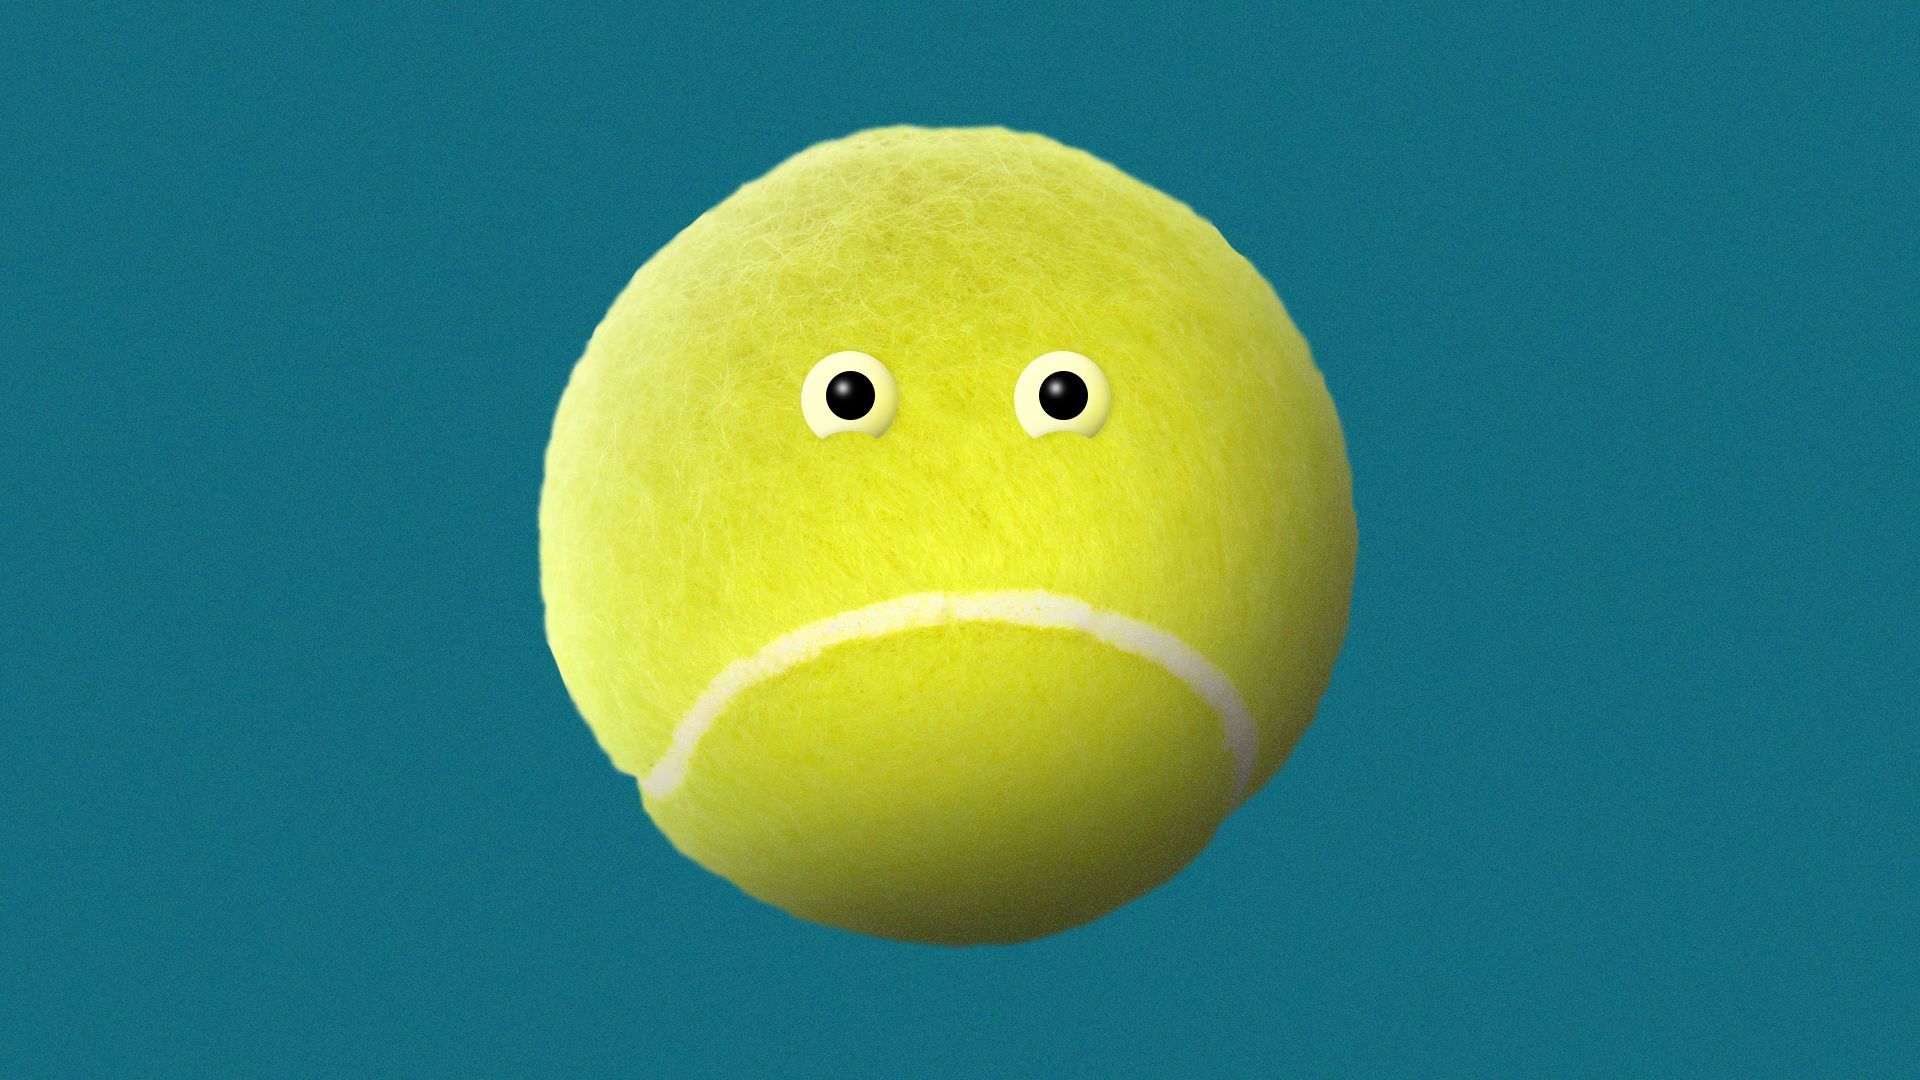 Sad tennis ball